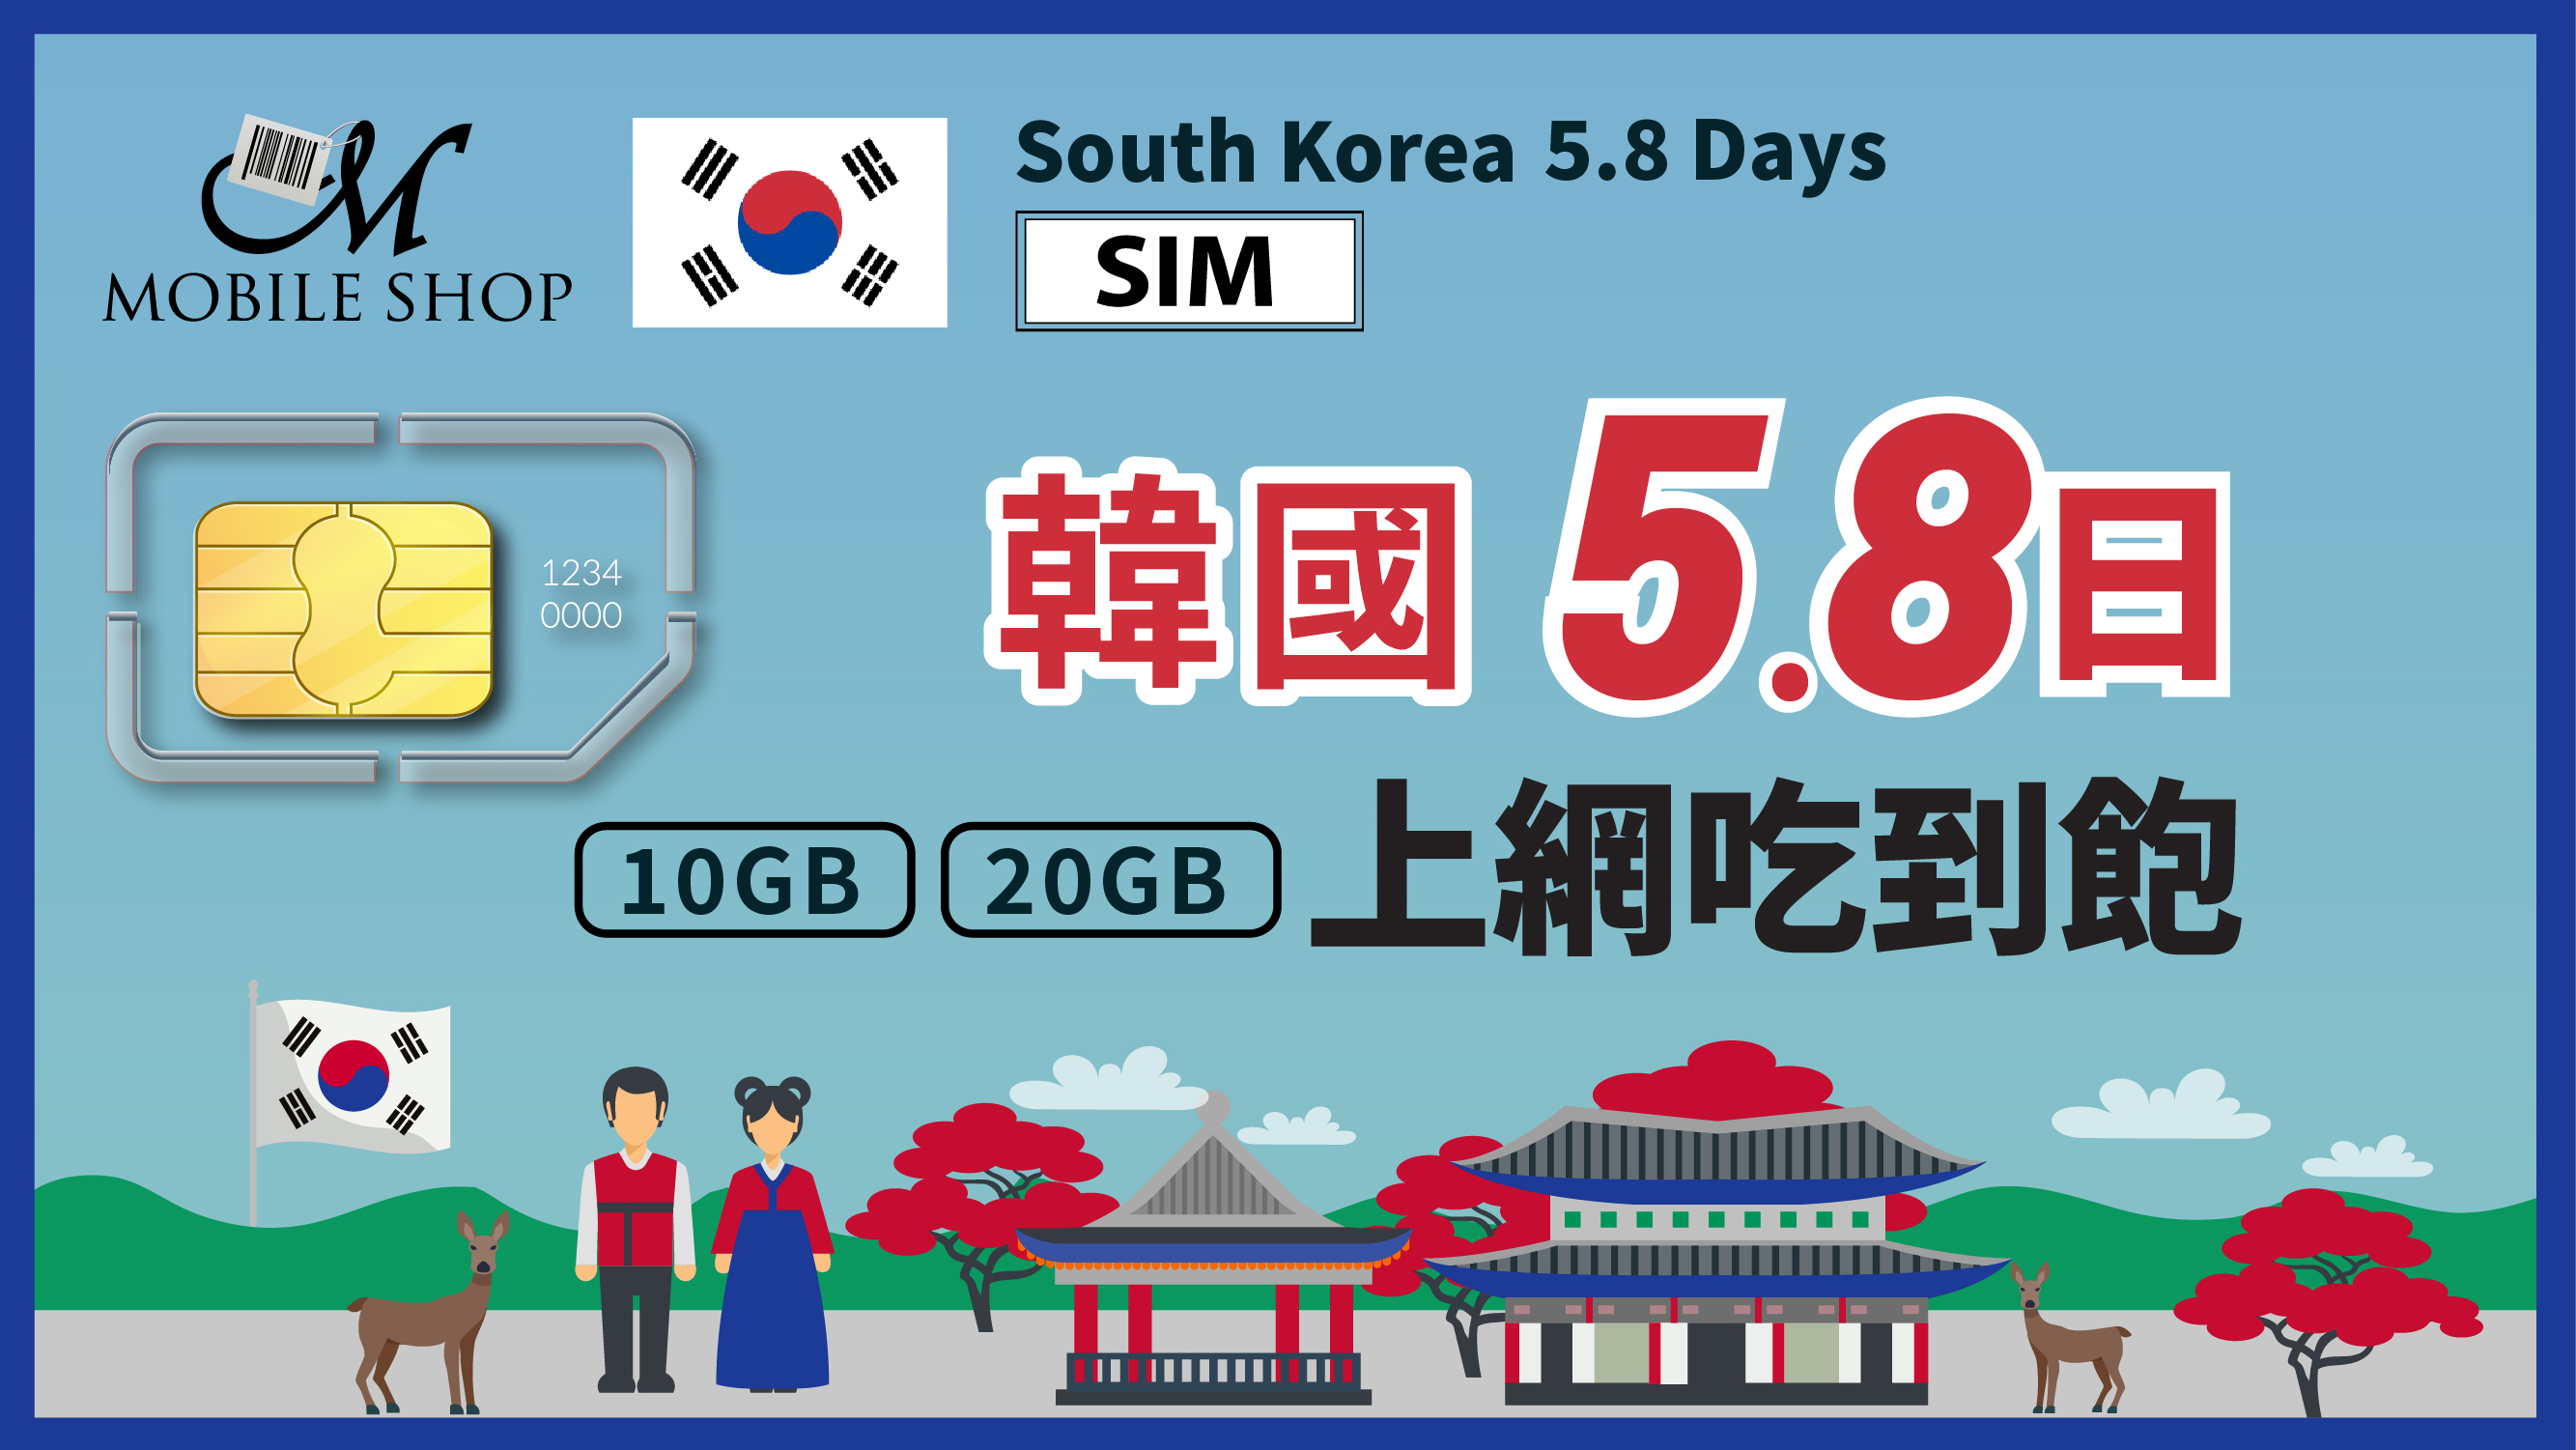 SIM Korea 5. 8 days unlimited data